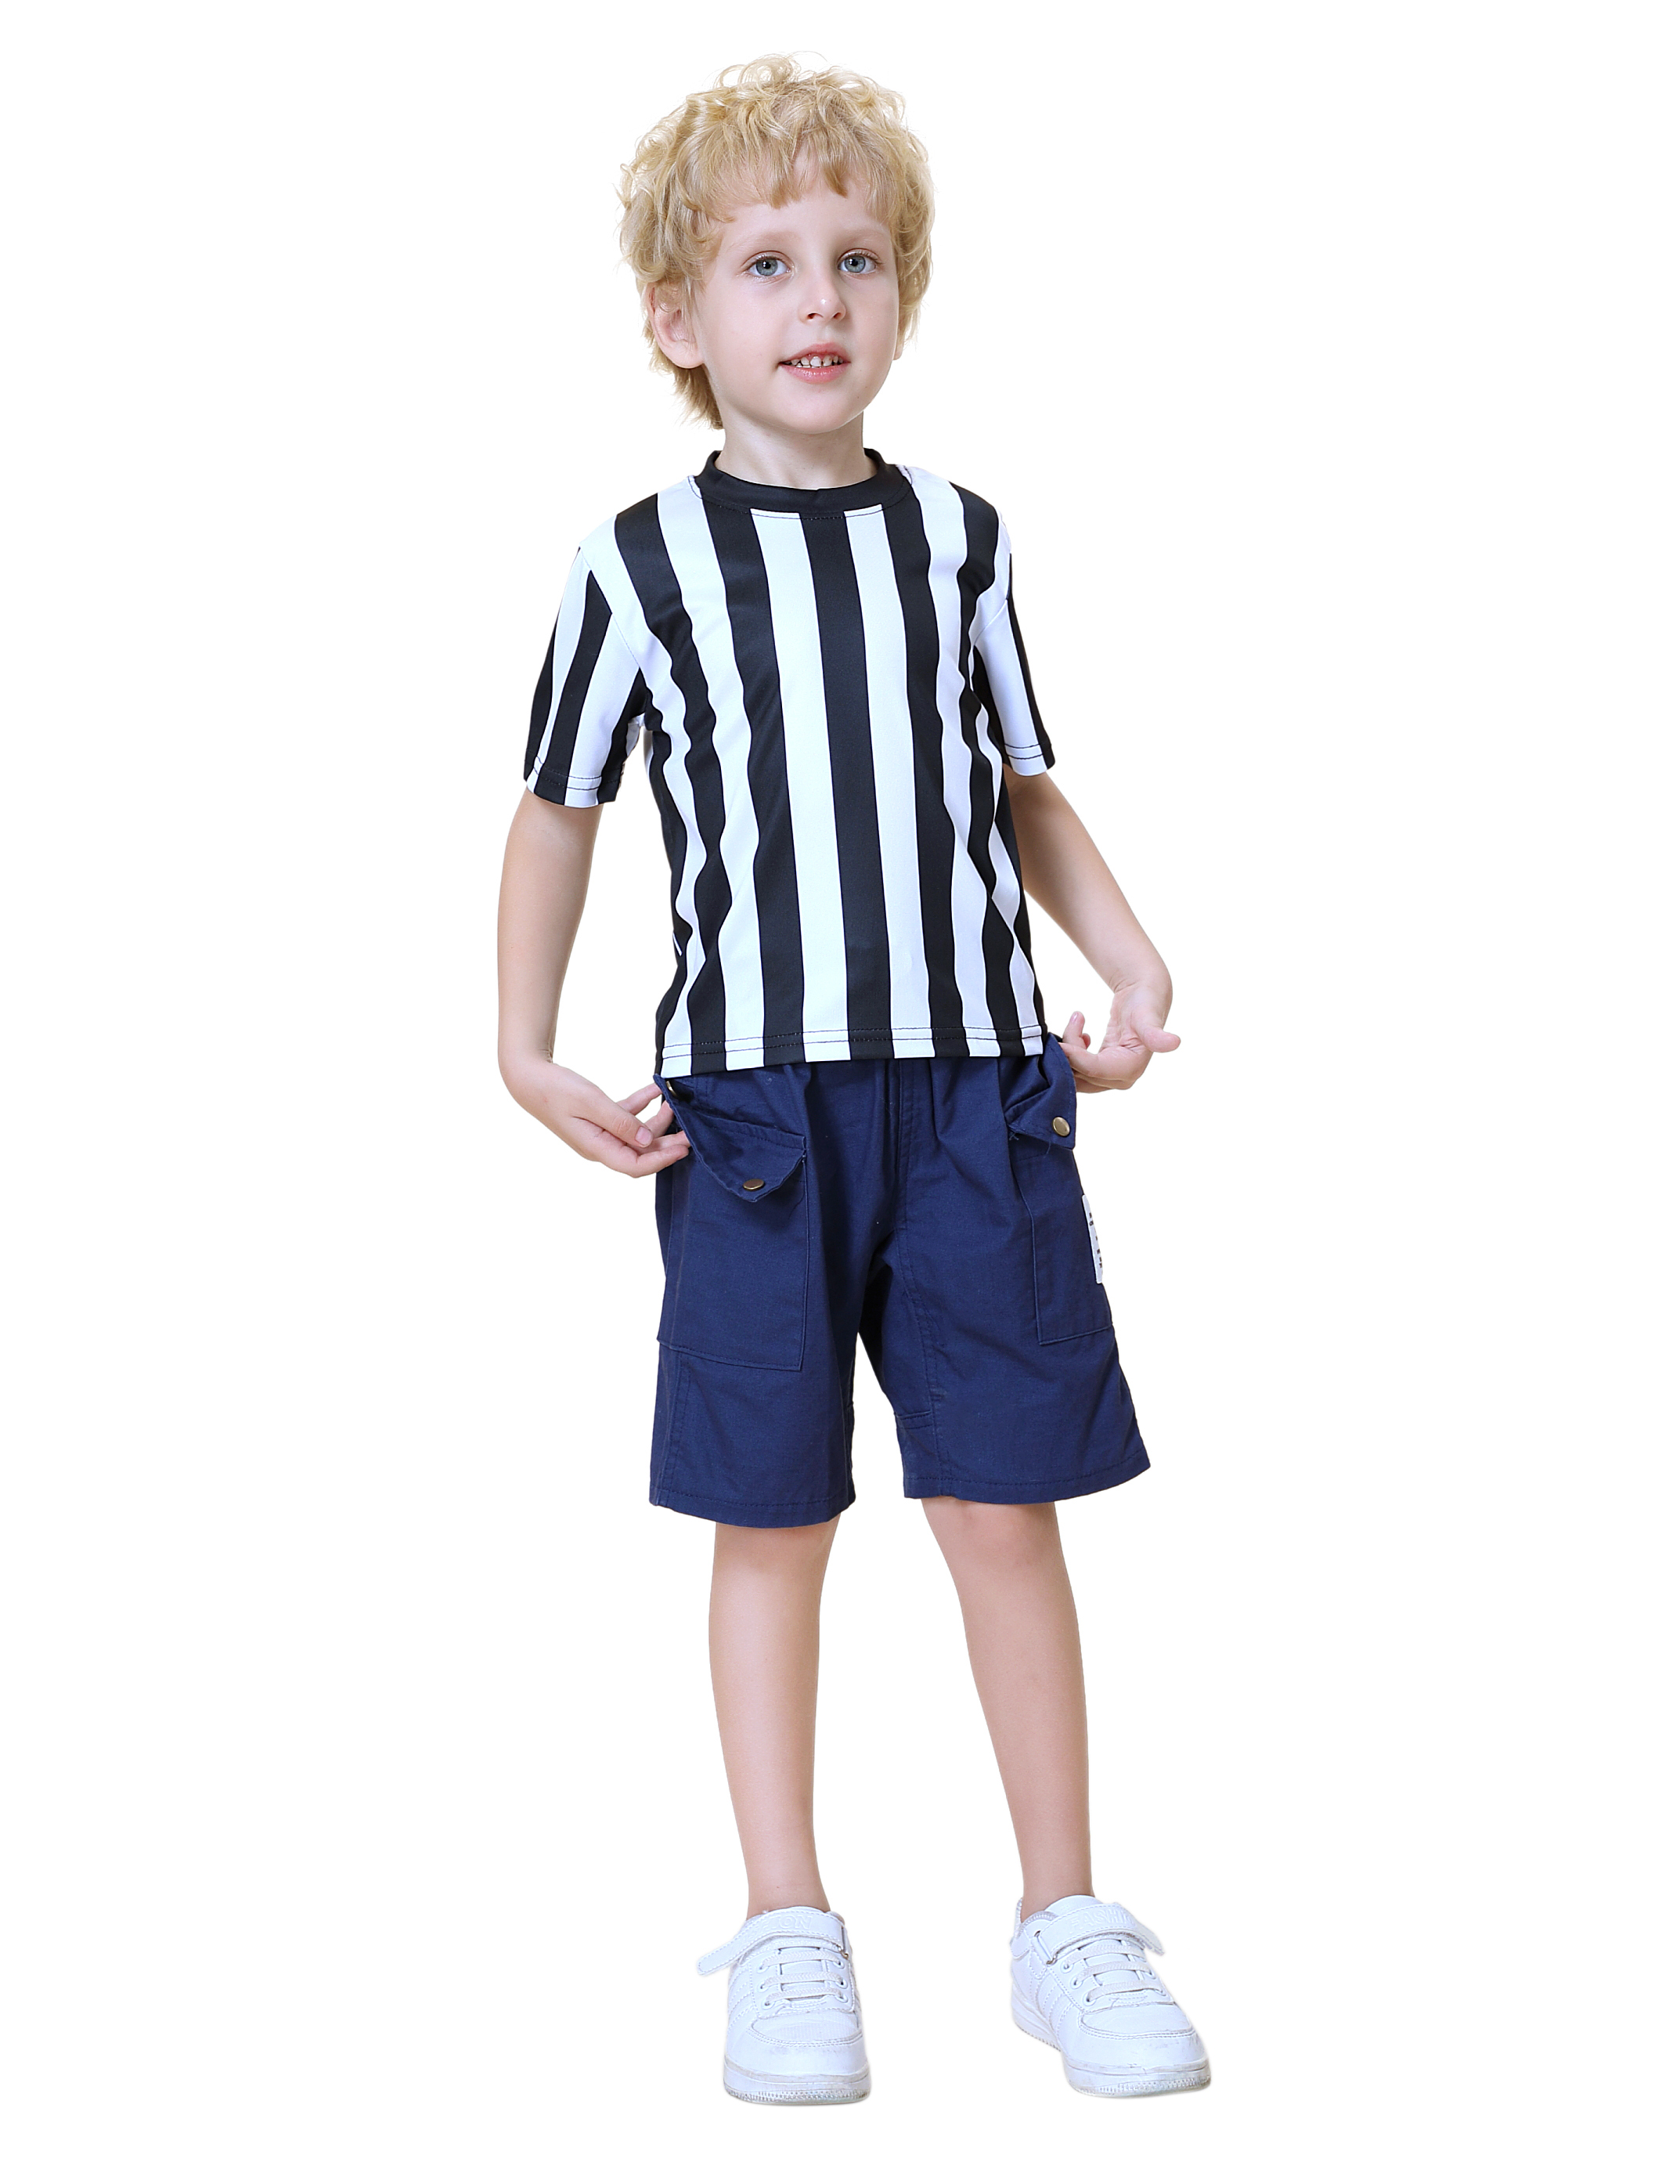 TOPTIE Sporting Goods Men's Referee Shirt Official V-Neck Black & White  Stripe Jersey Sale, Reviews. - Opentip